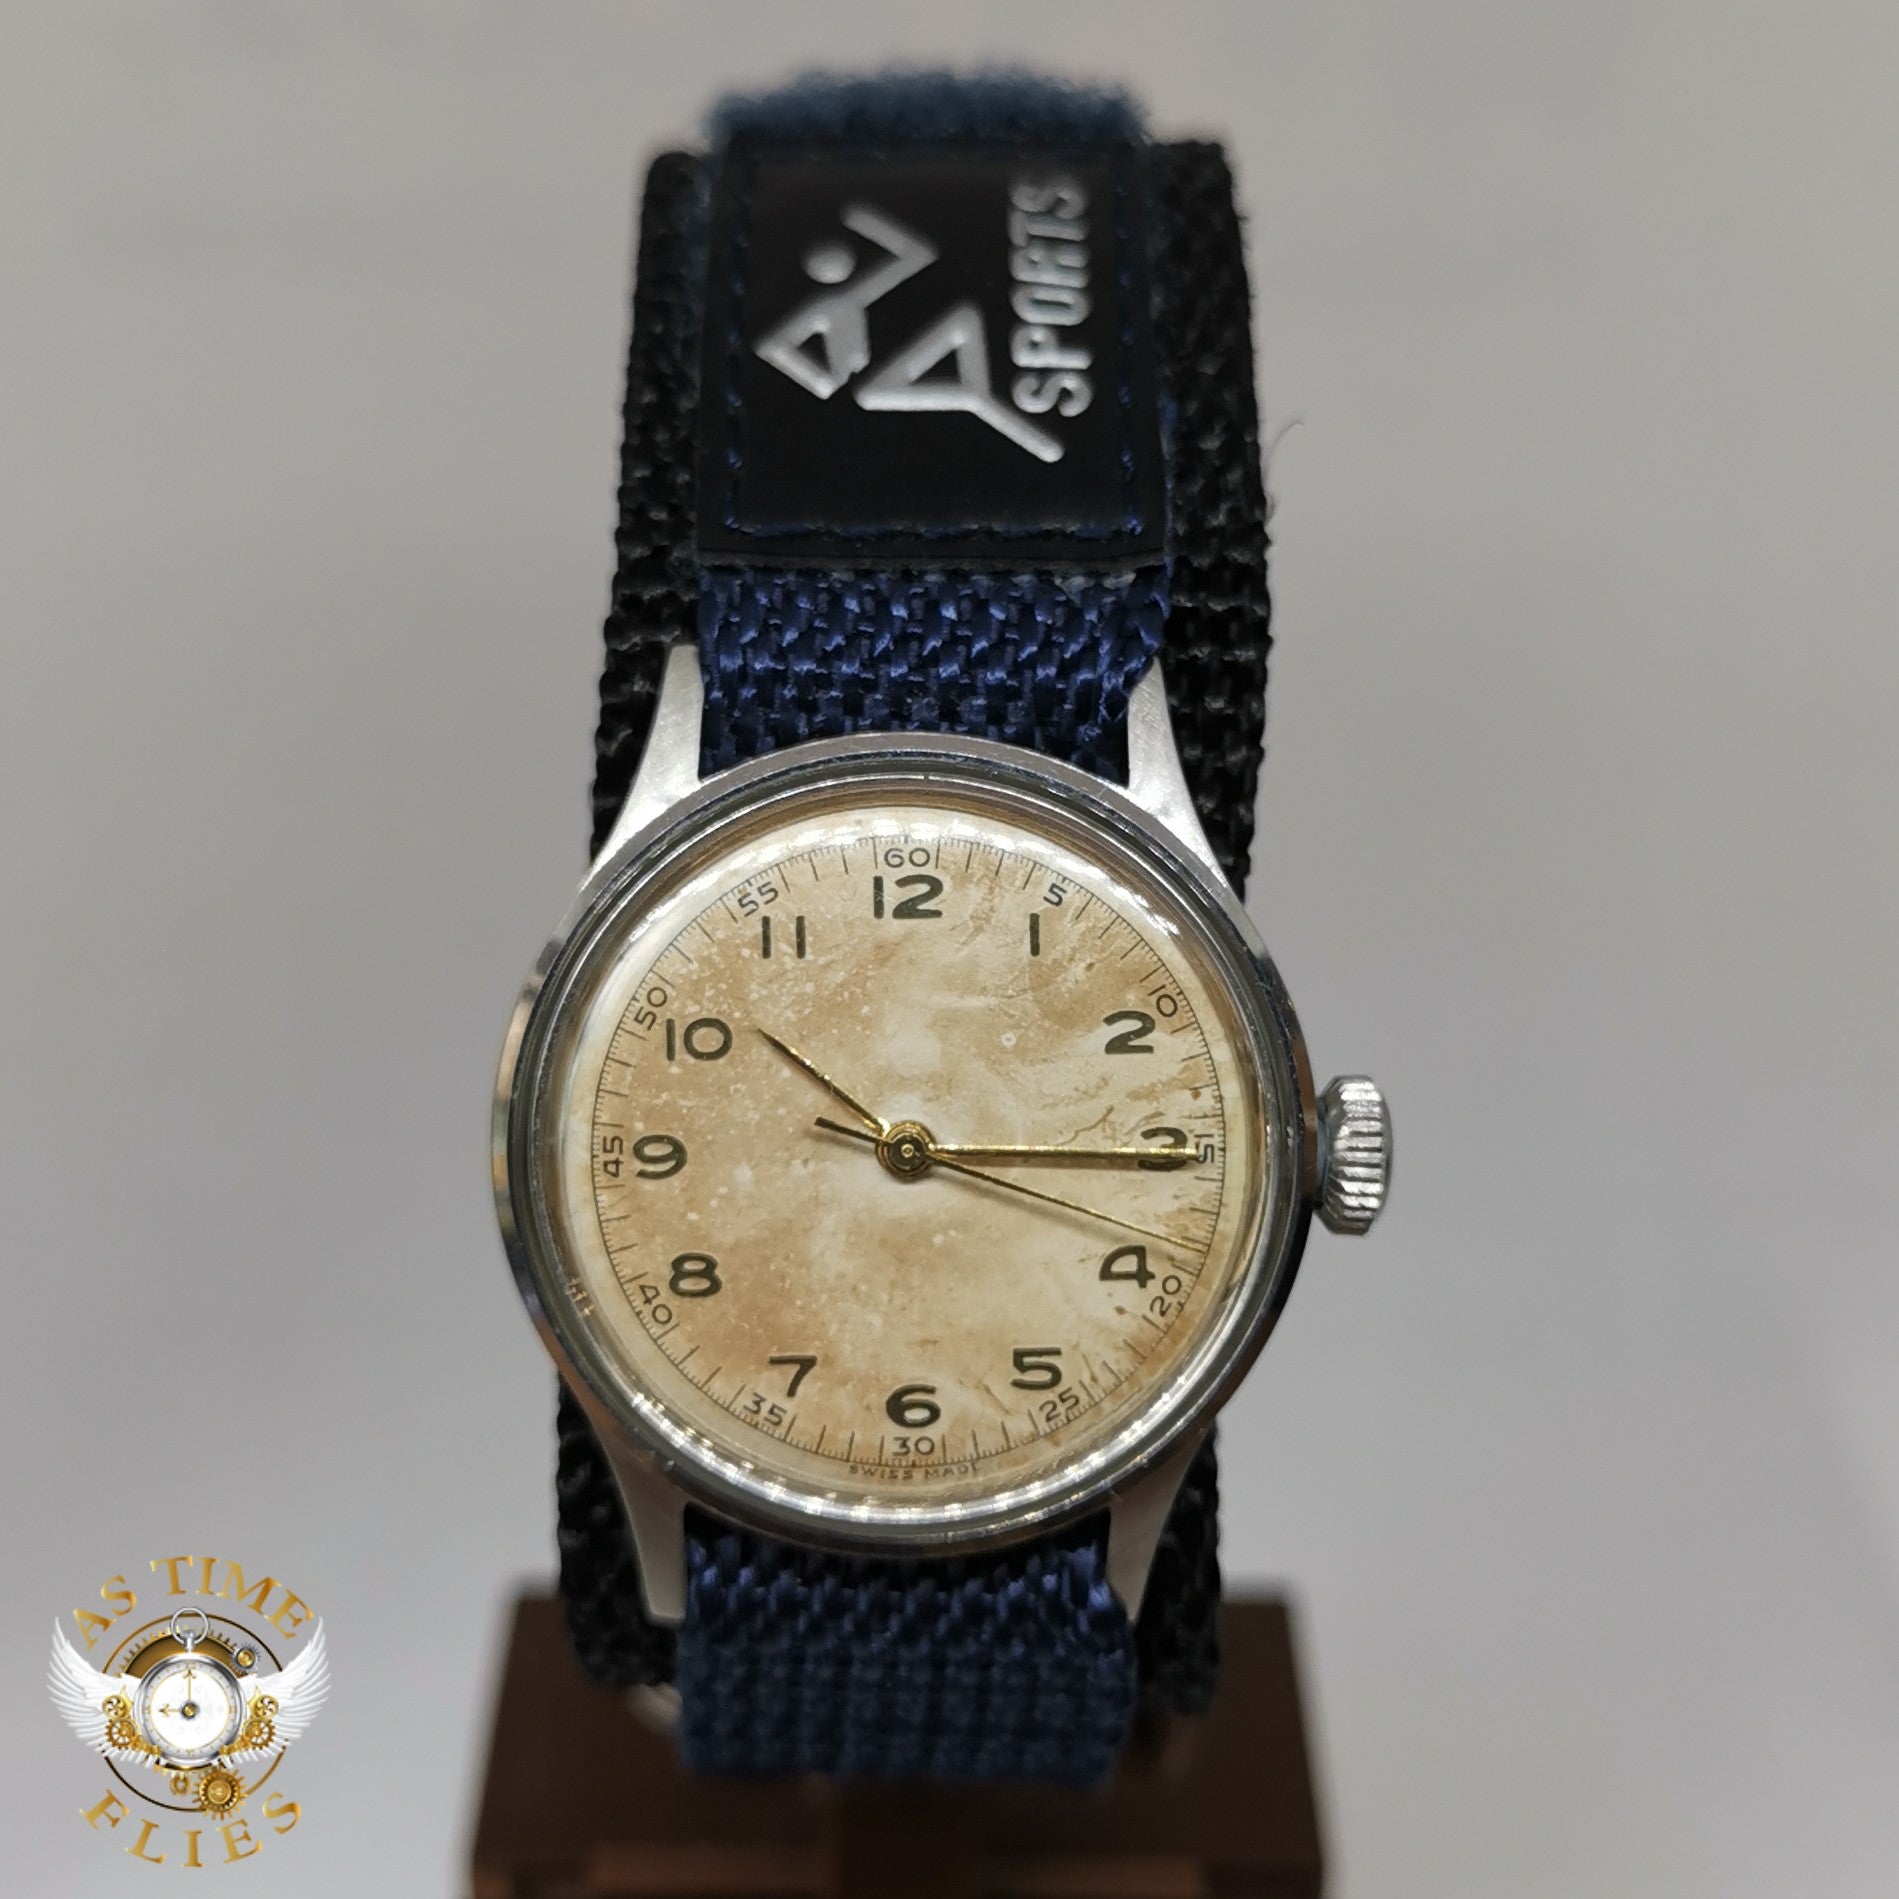 Empire Watch Co. manual-wind watch